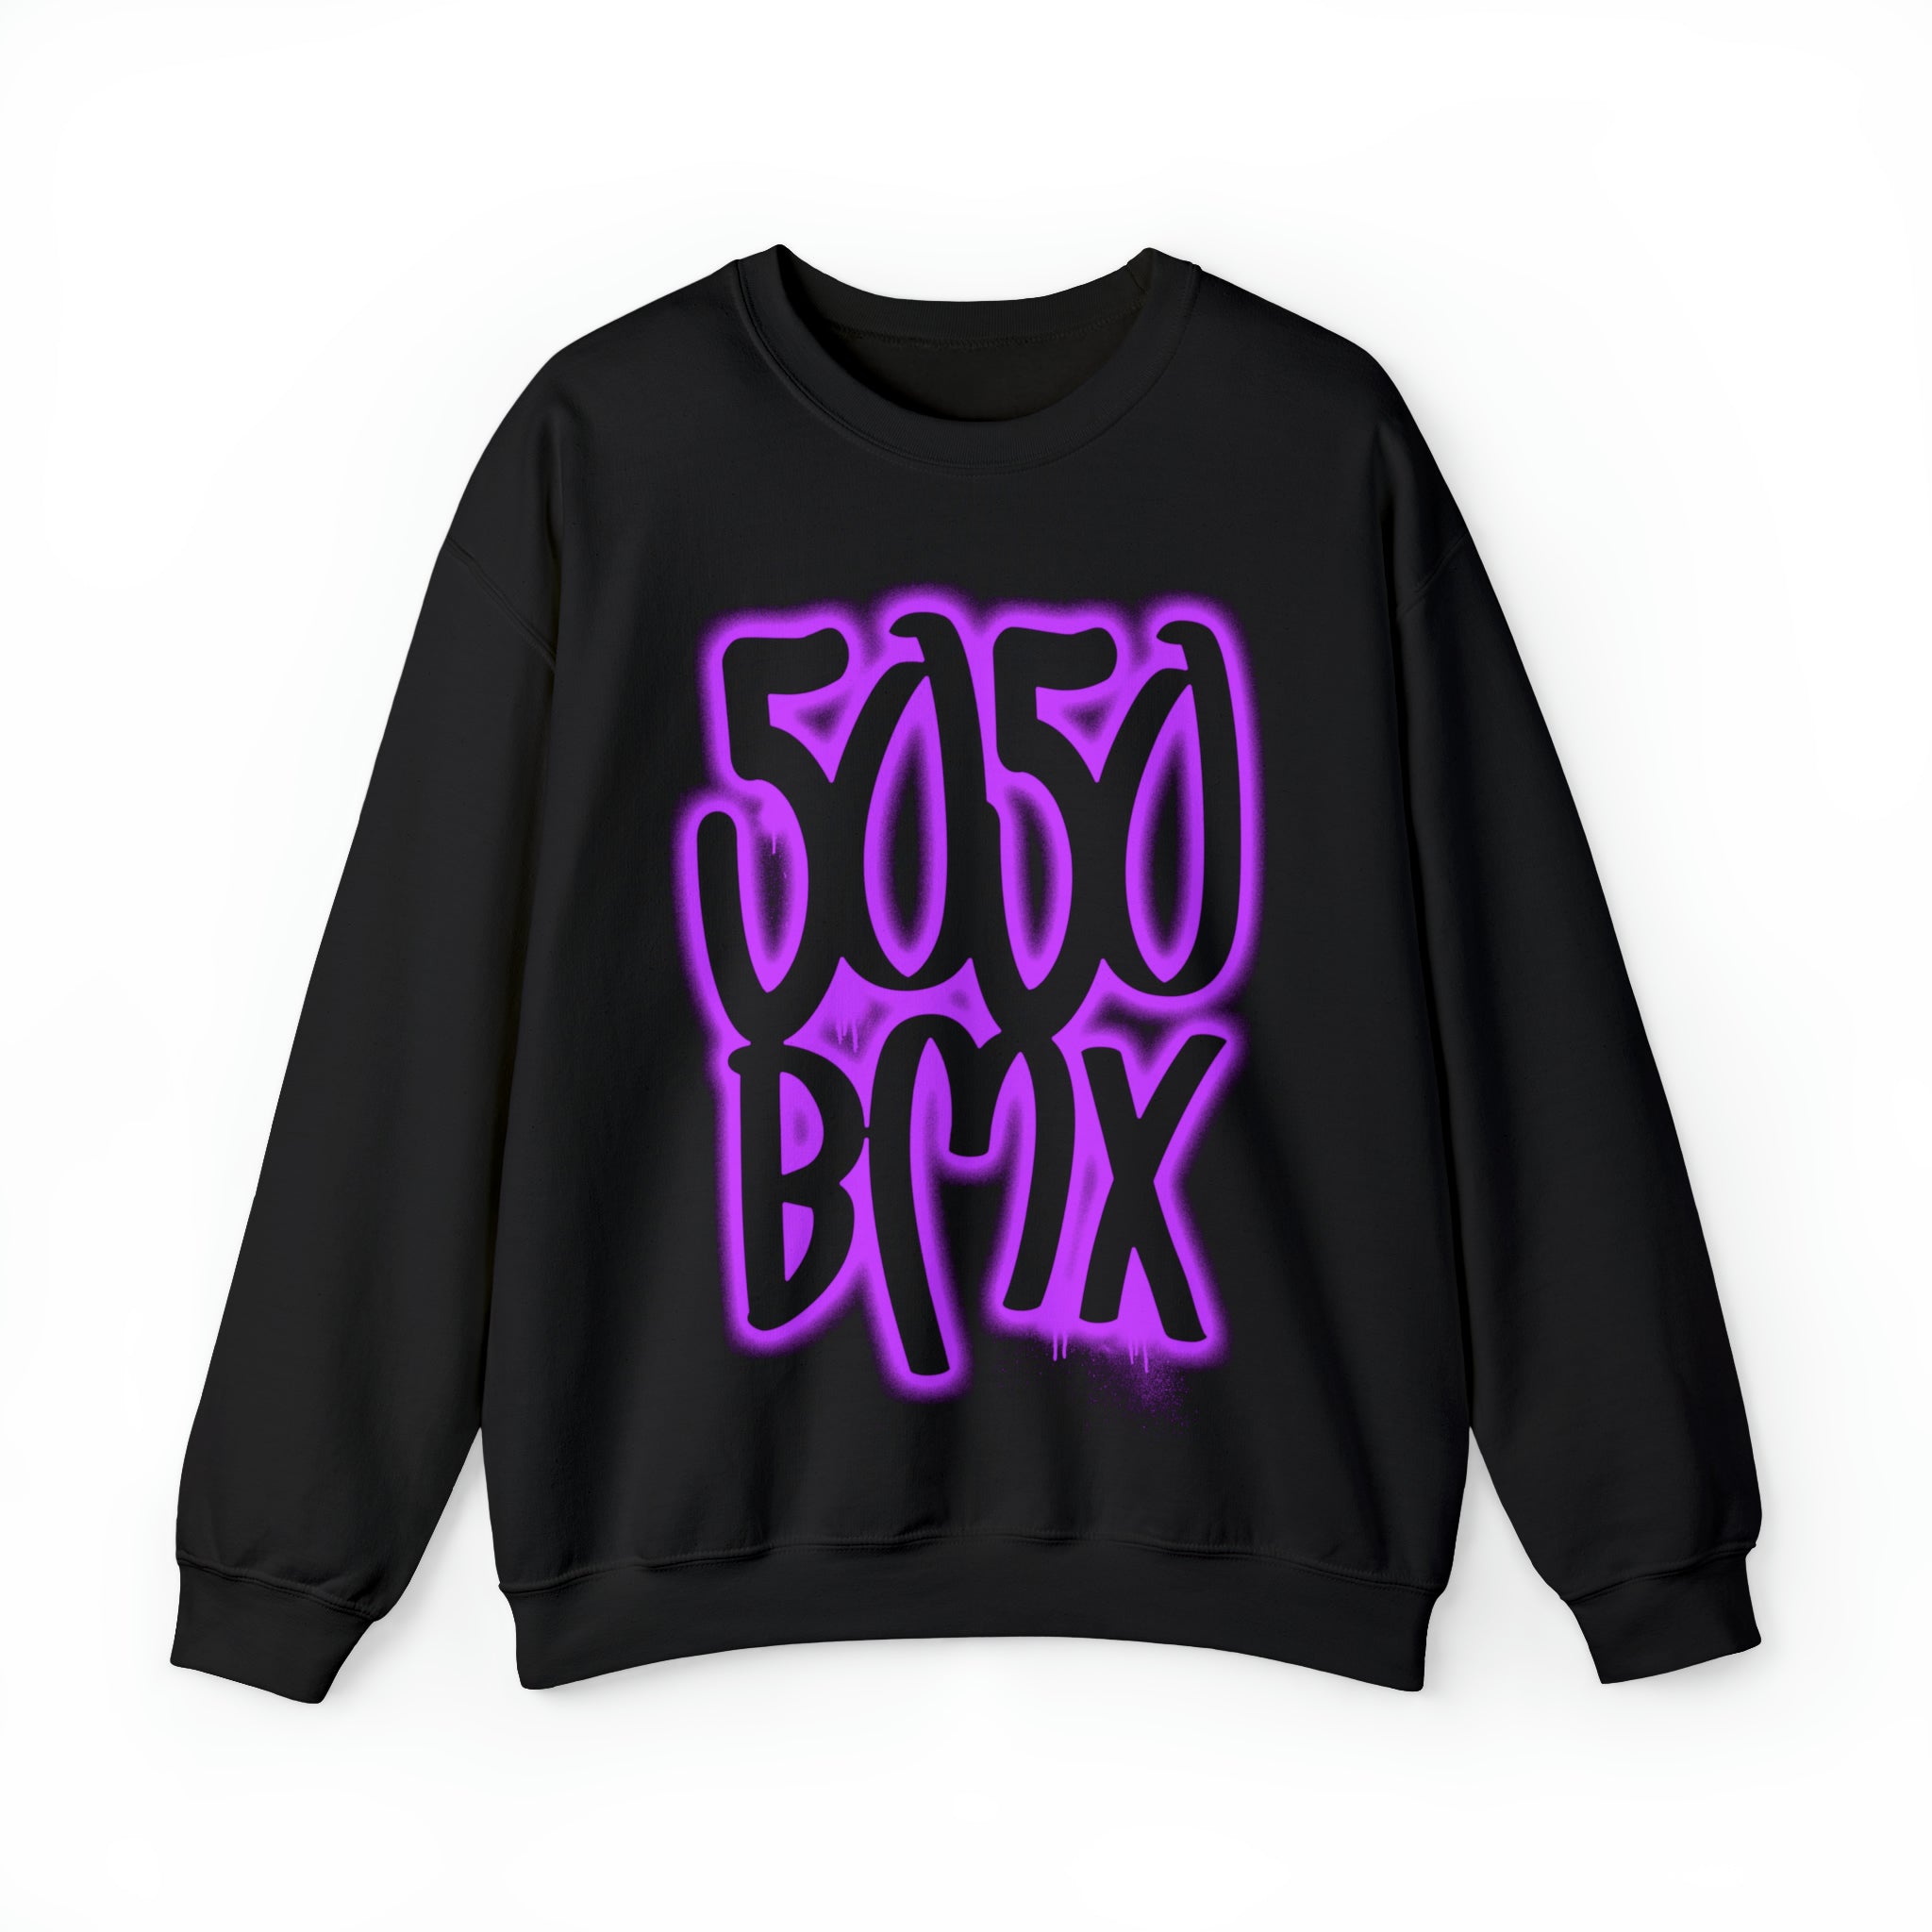 5050bmx Graffiti Crewneck Sweatshirt (Purple)